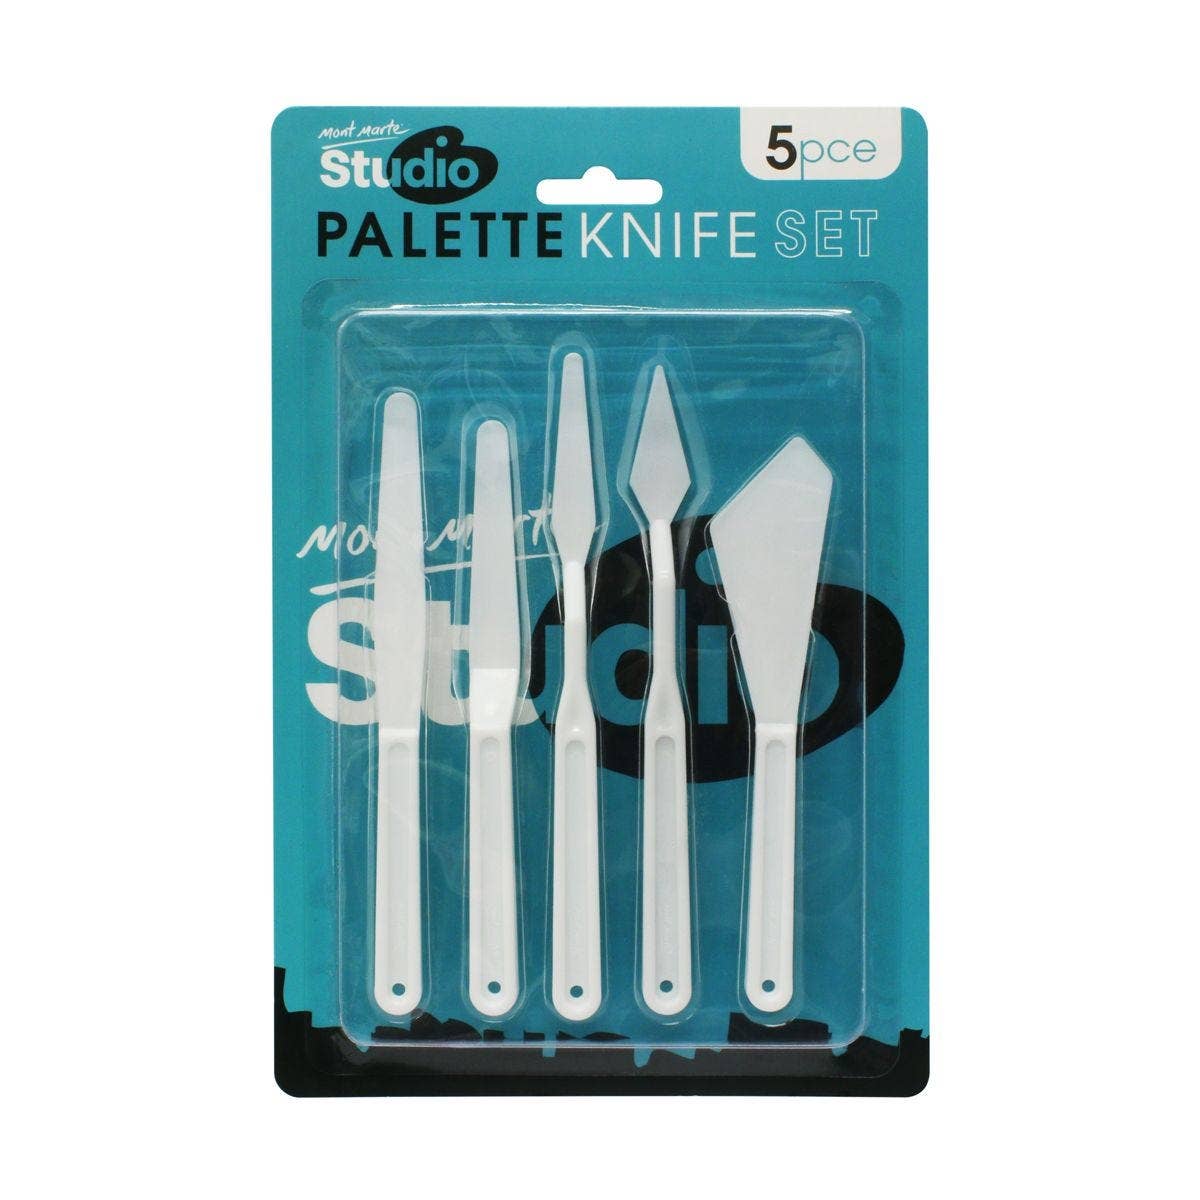 Studio Palette Knife Set 5pce - Plastic